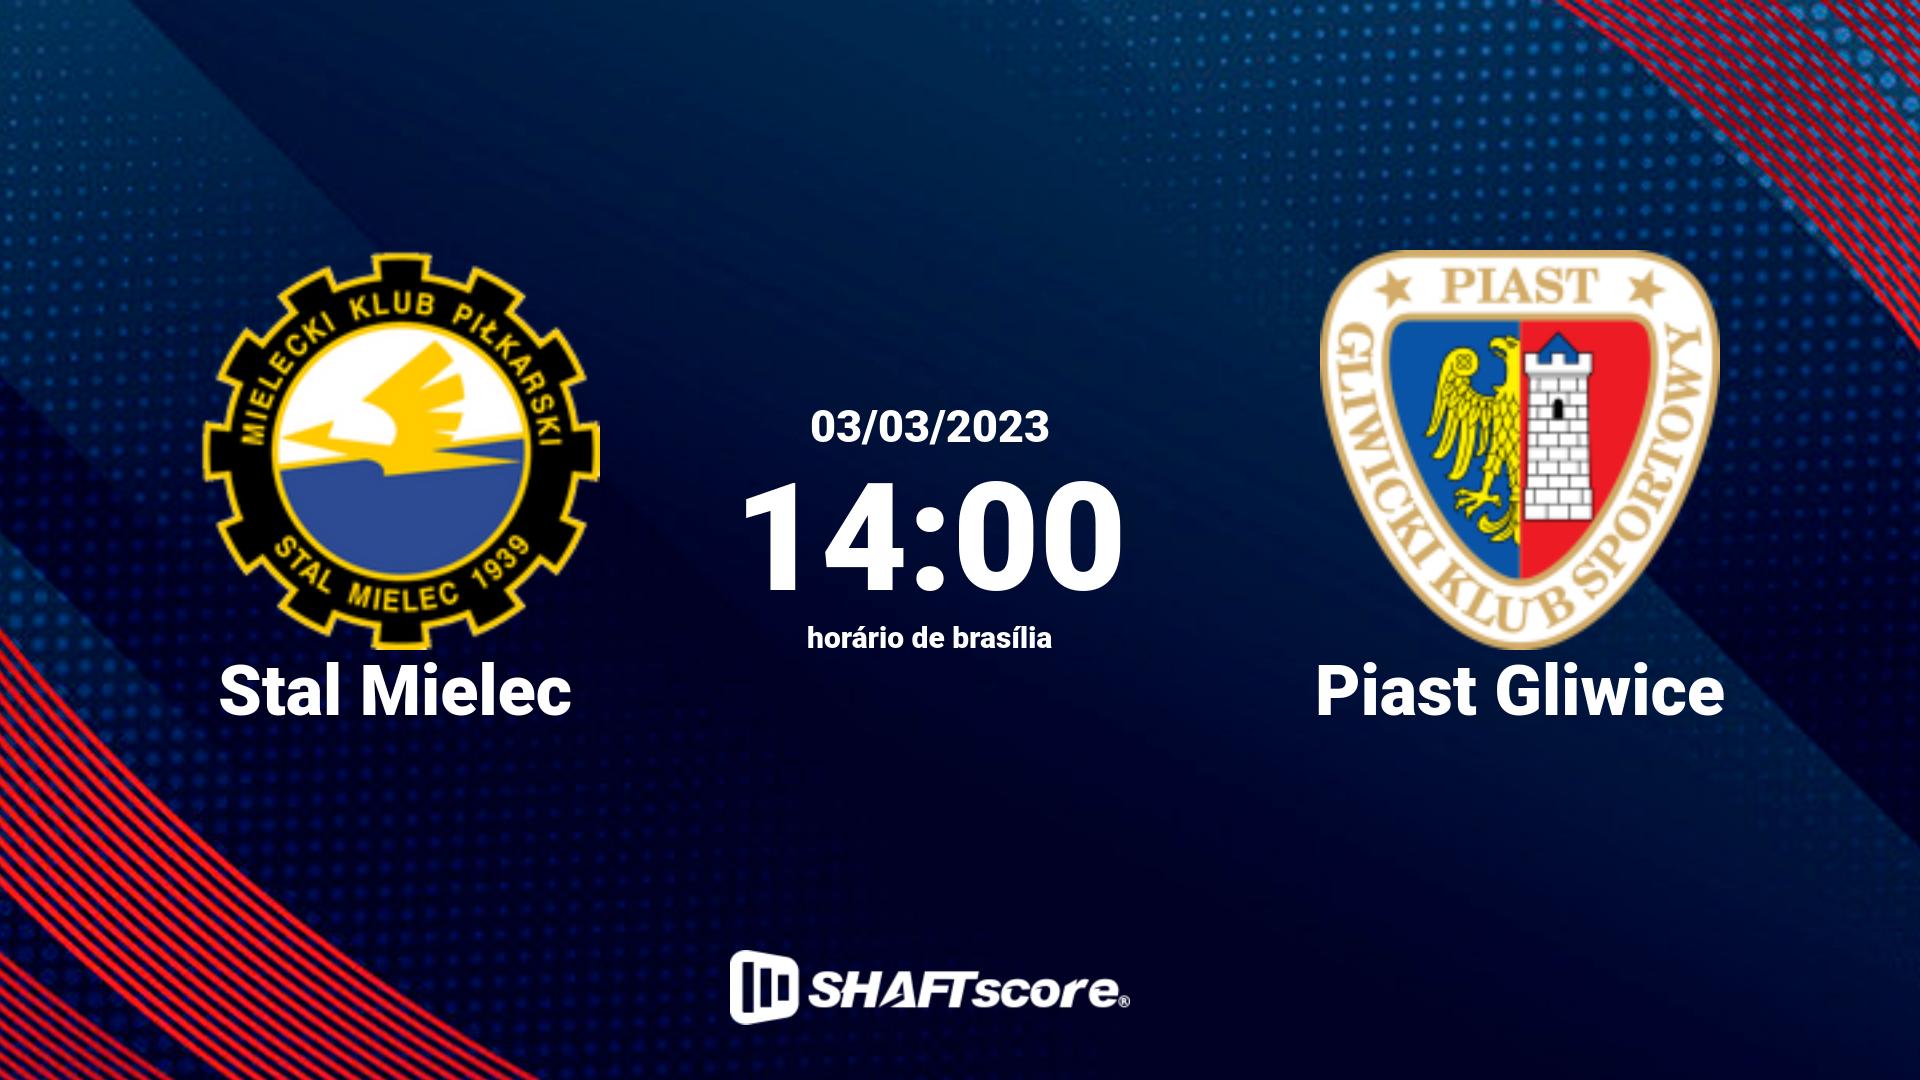 Estatísticas do jogo Stal Mielec vs Piast Gliwice 03.03 14:00